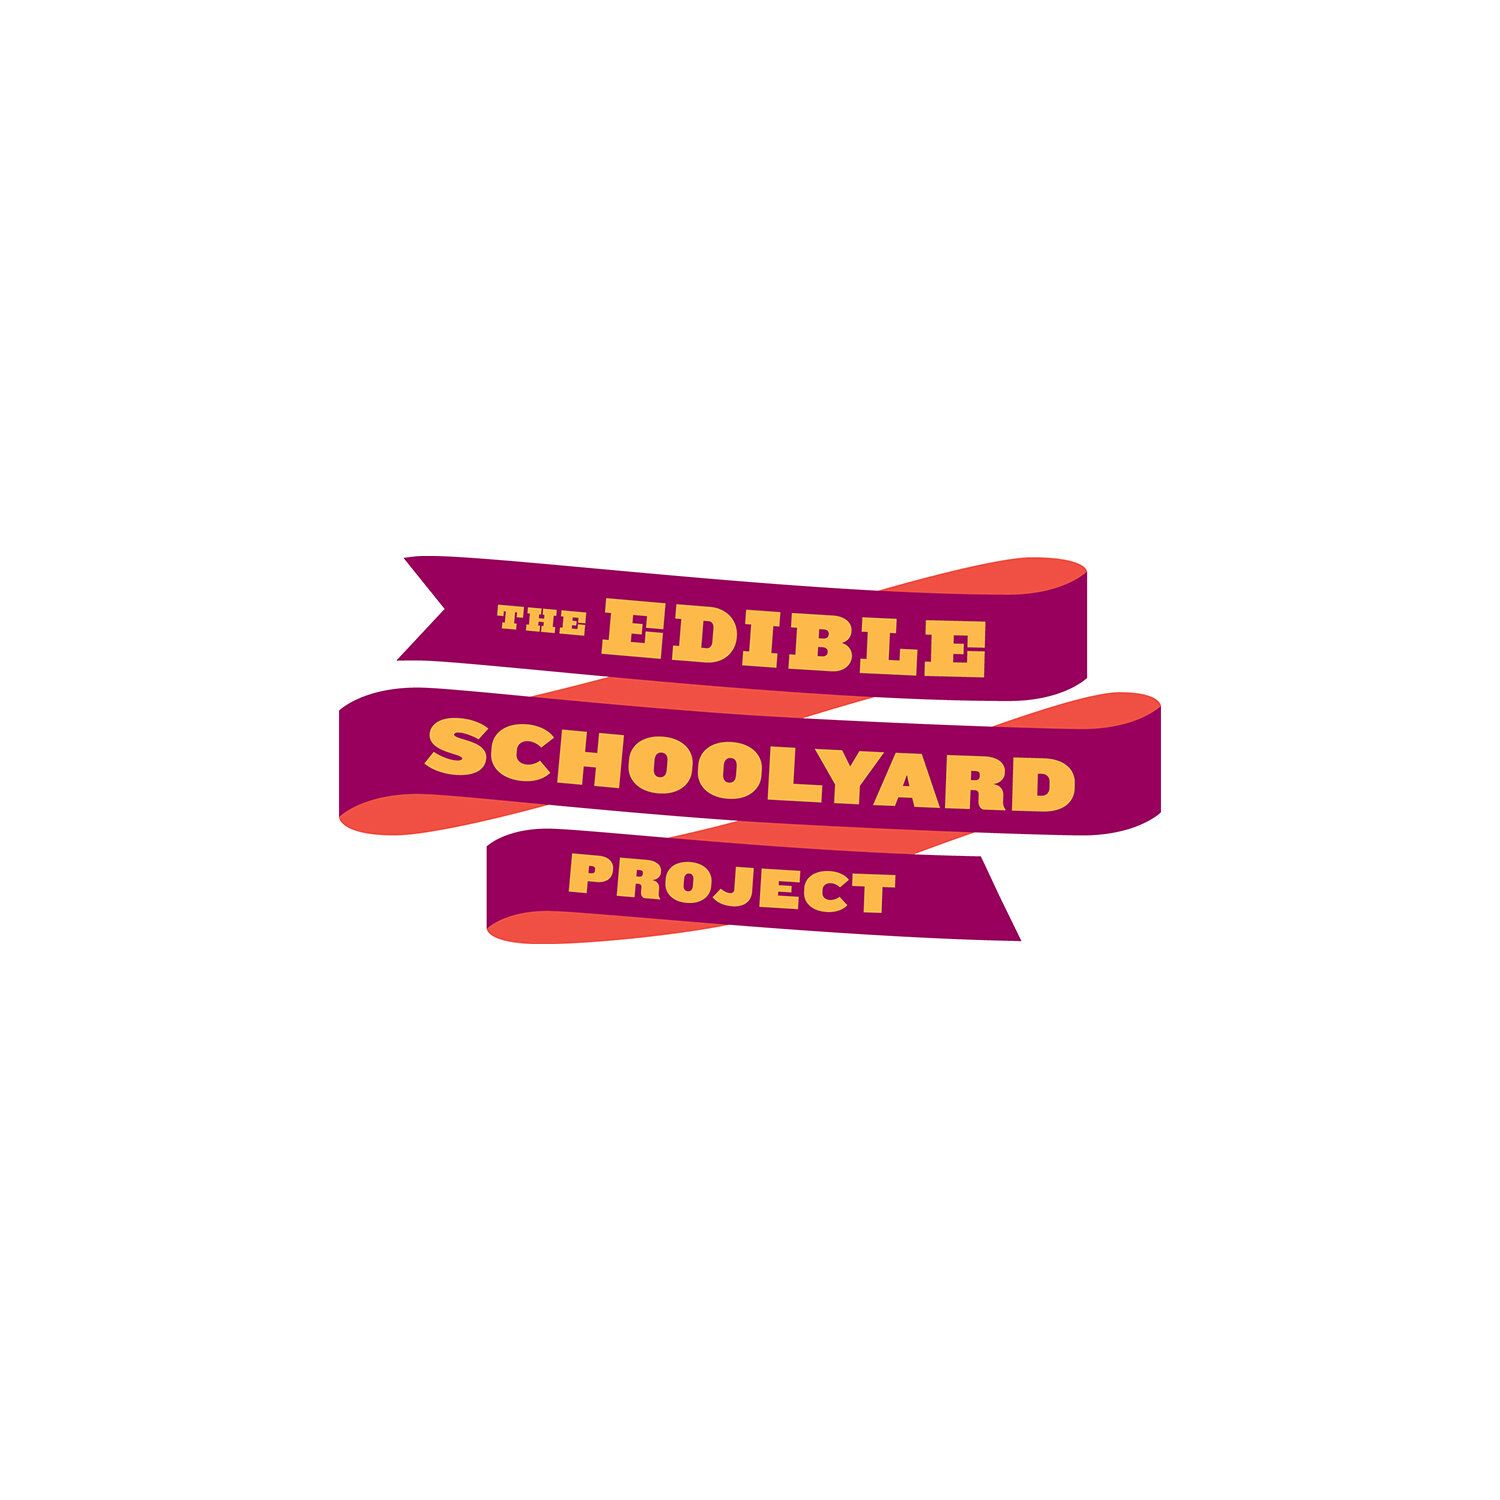 edible-schoolyard-project-logo-1500px.jpg